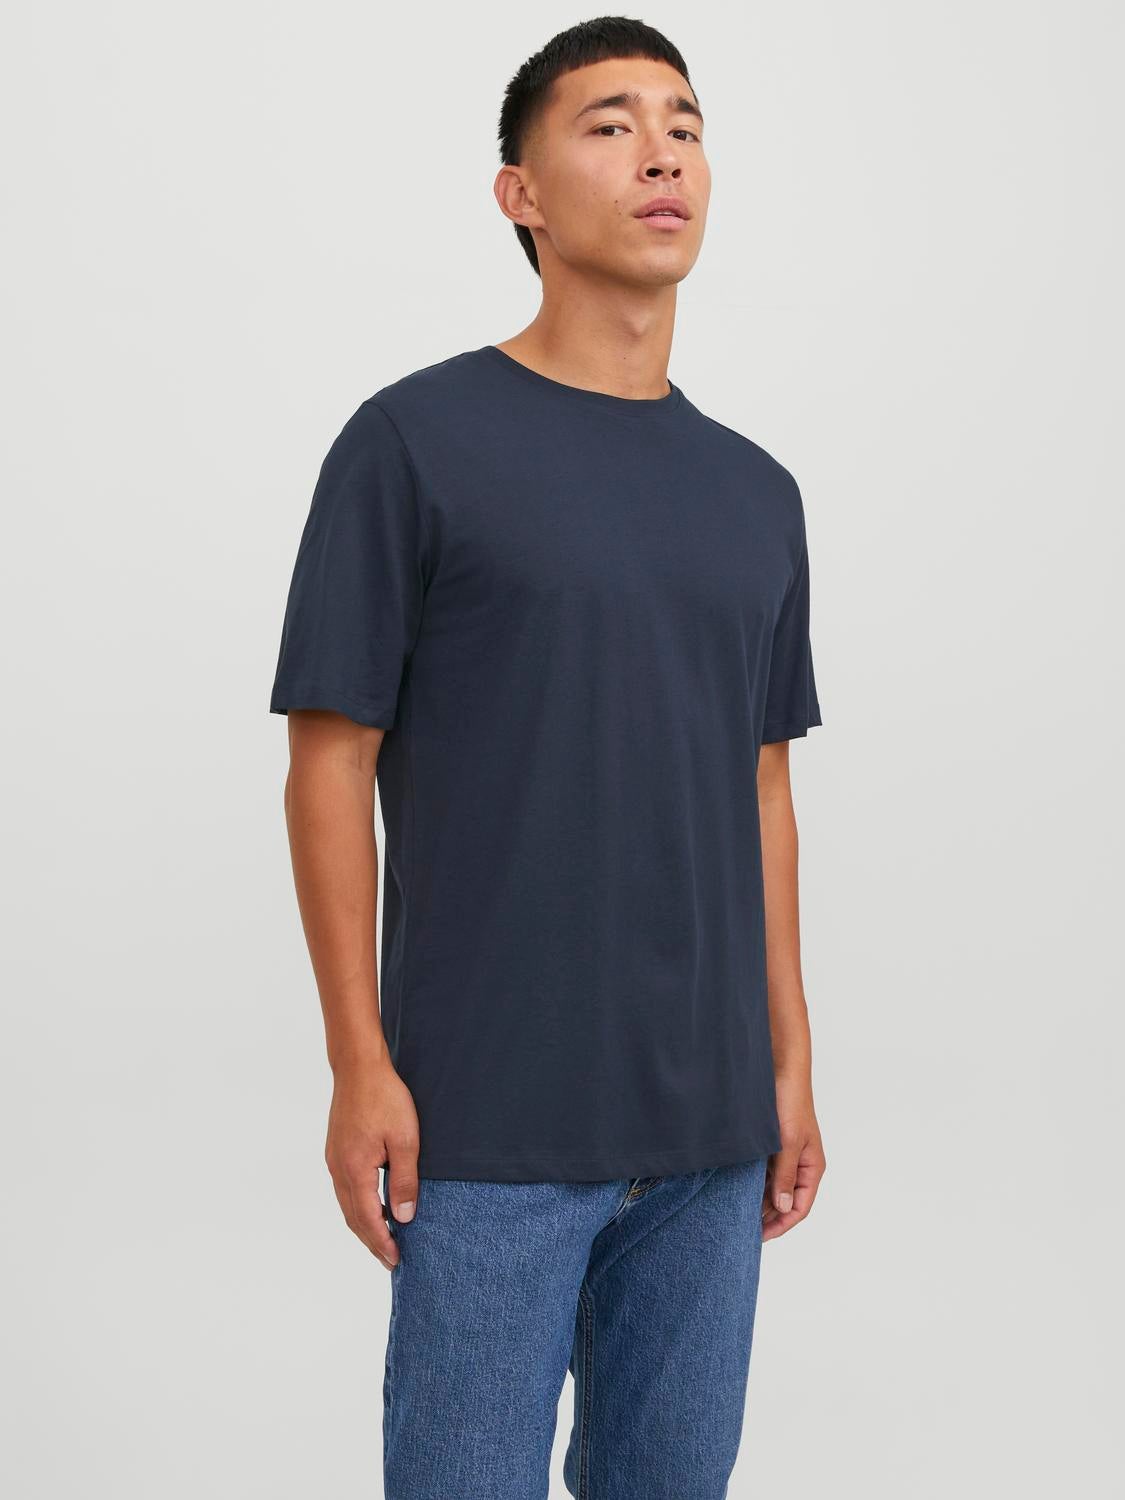 Navy Blue L discount 56% MEN FASHION Shirts & T-shirts Casual Jack & Jones Shirt 